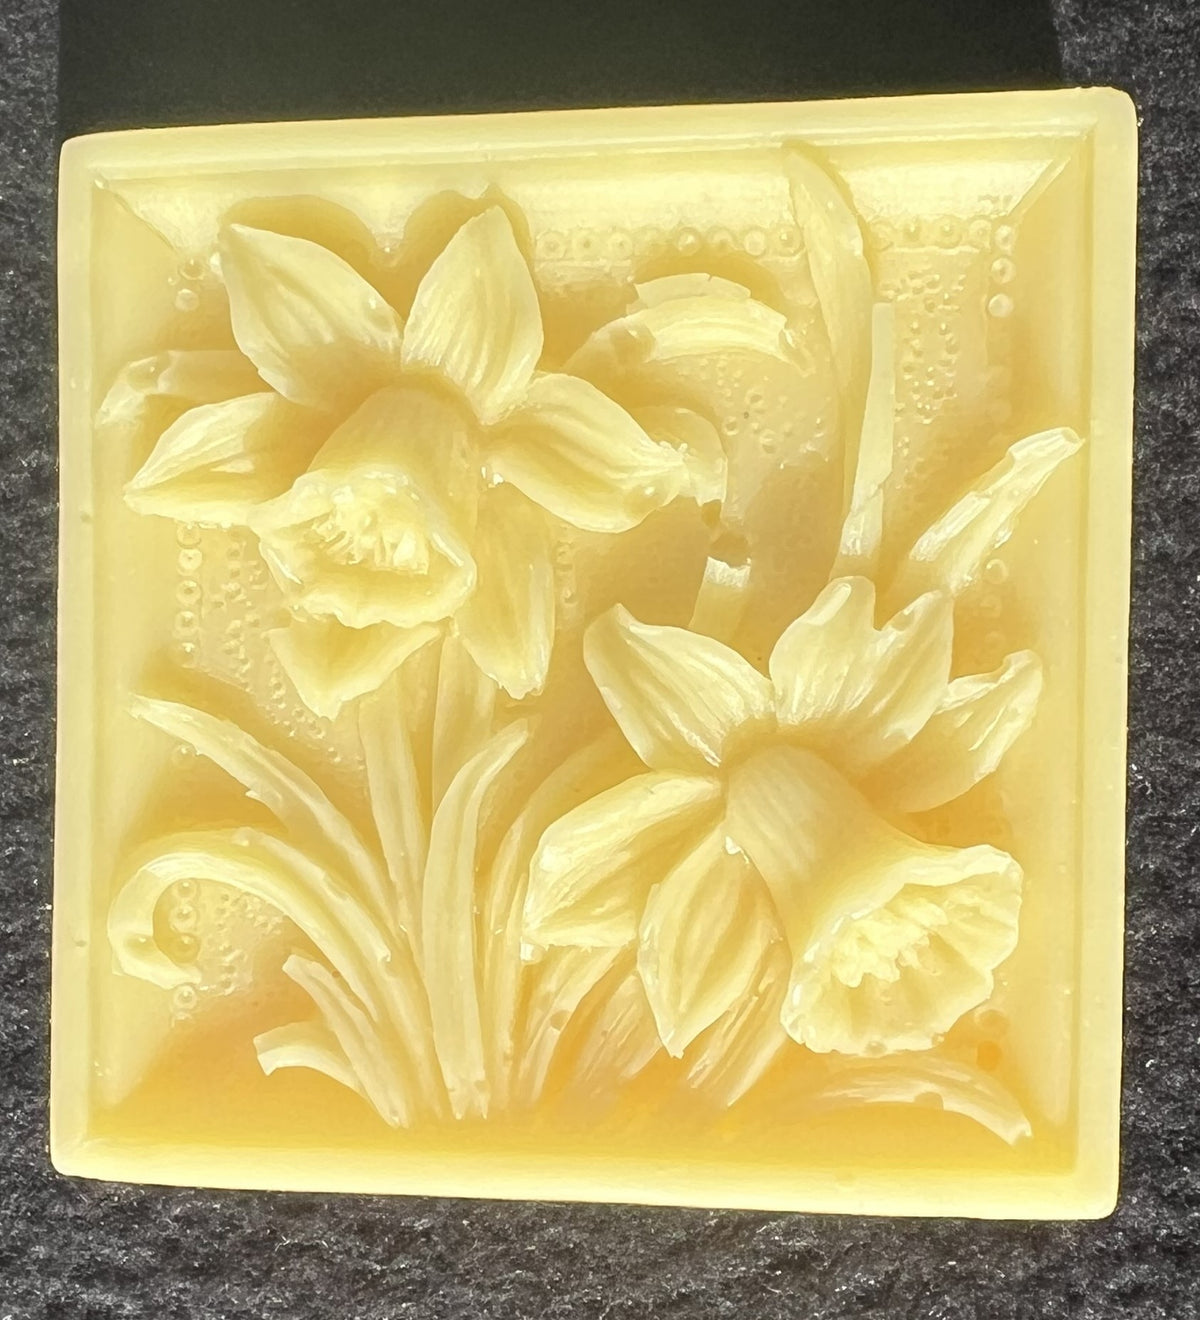 Skin Care -  4 oz Daffodil or Pansies, Lemon/Lavender Body Butter Lotion Bars